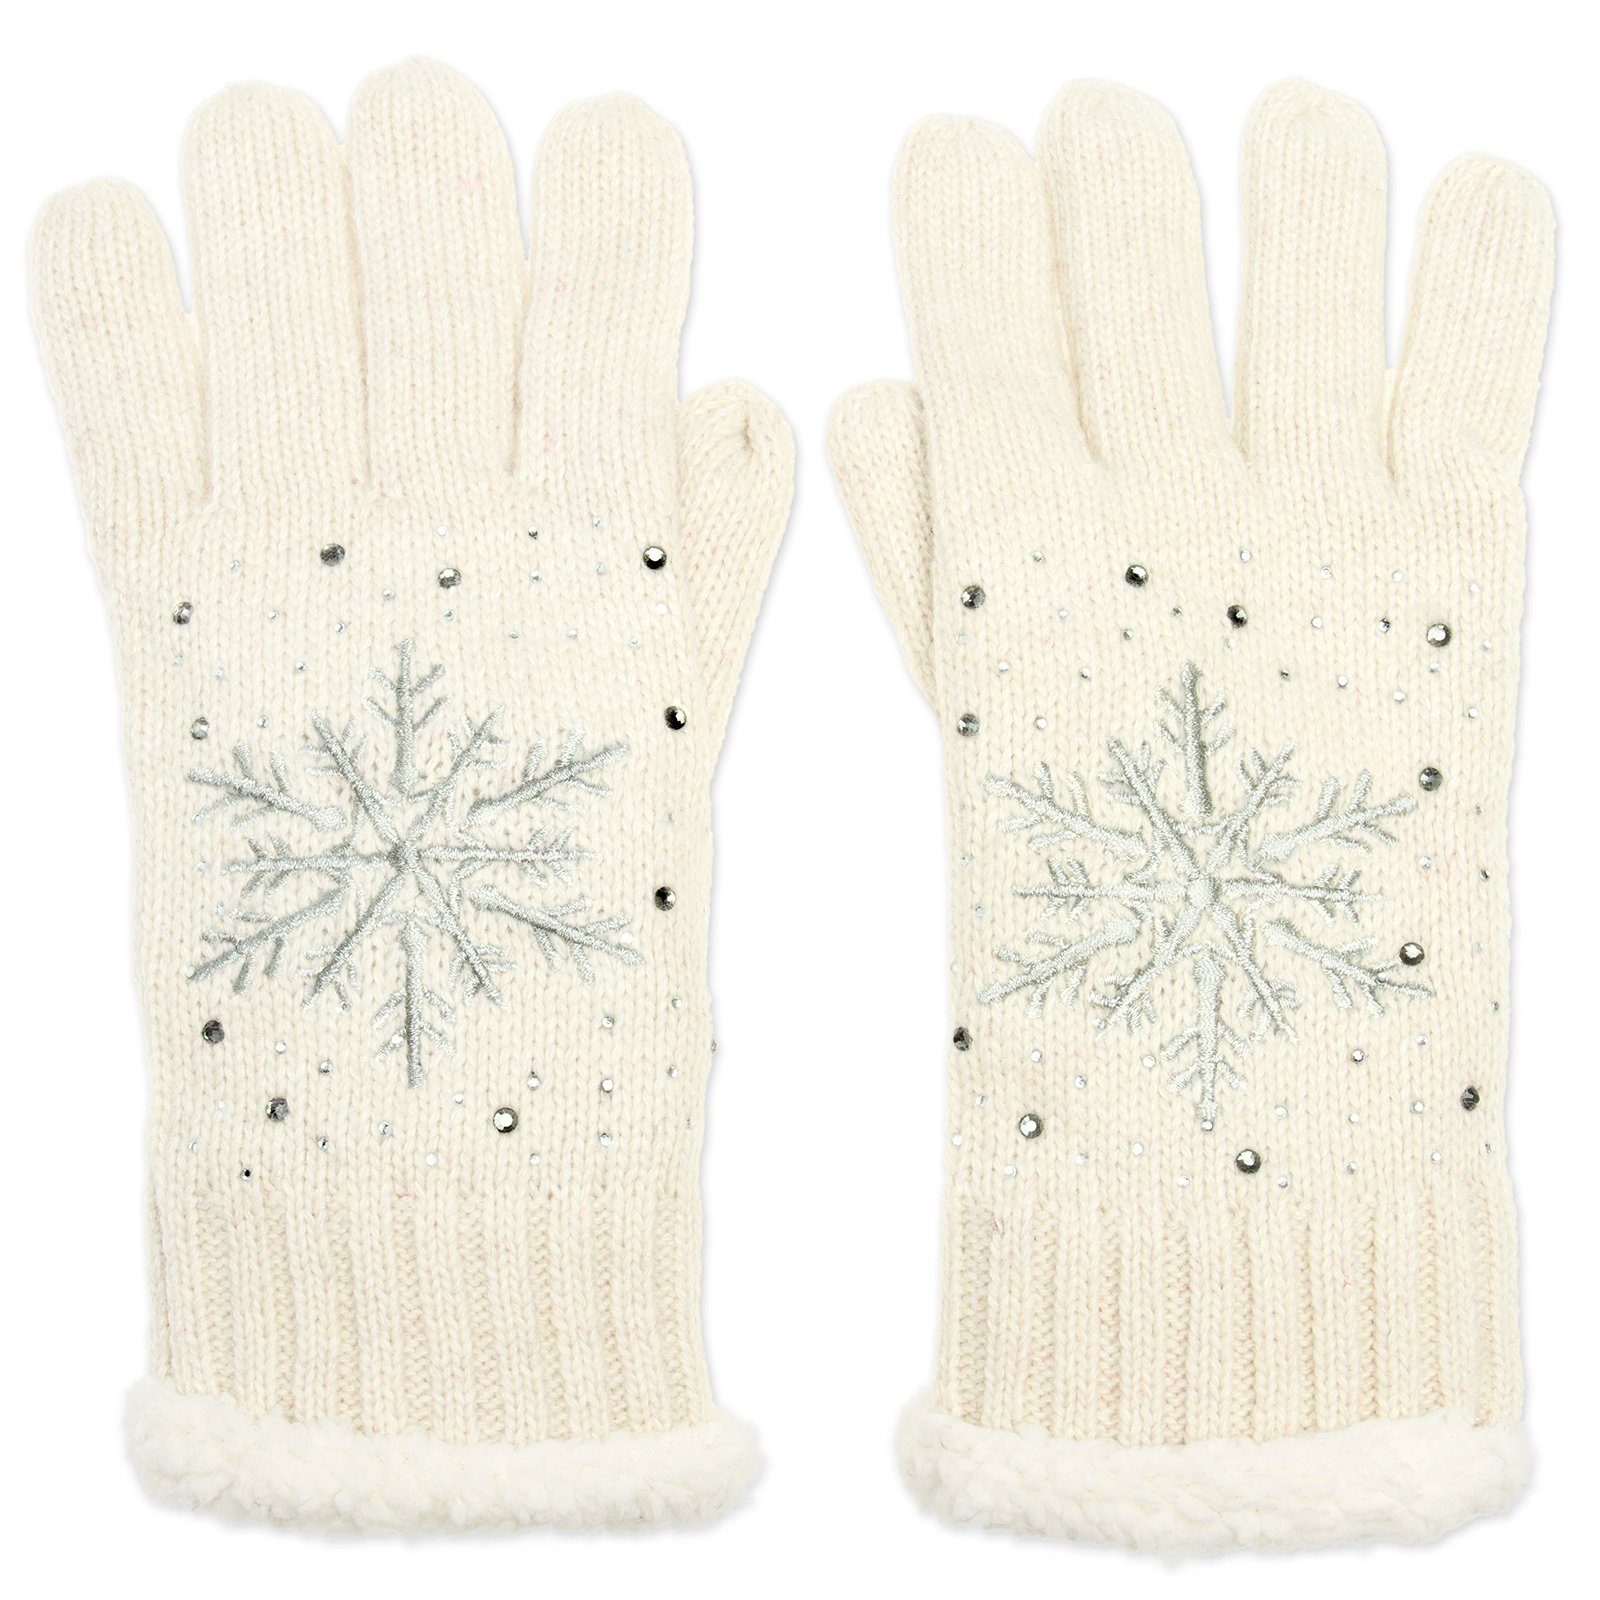 Faera Handschuhe Damen gefütterte Wollhandschuhe Strickhandschuhe Winterhandschuhe für Herbst Winter Onesize